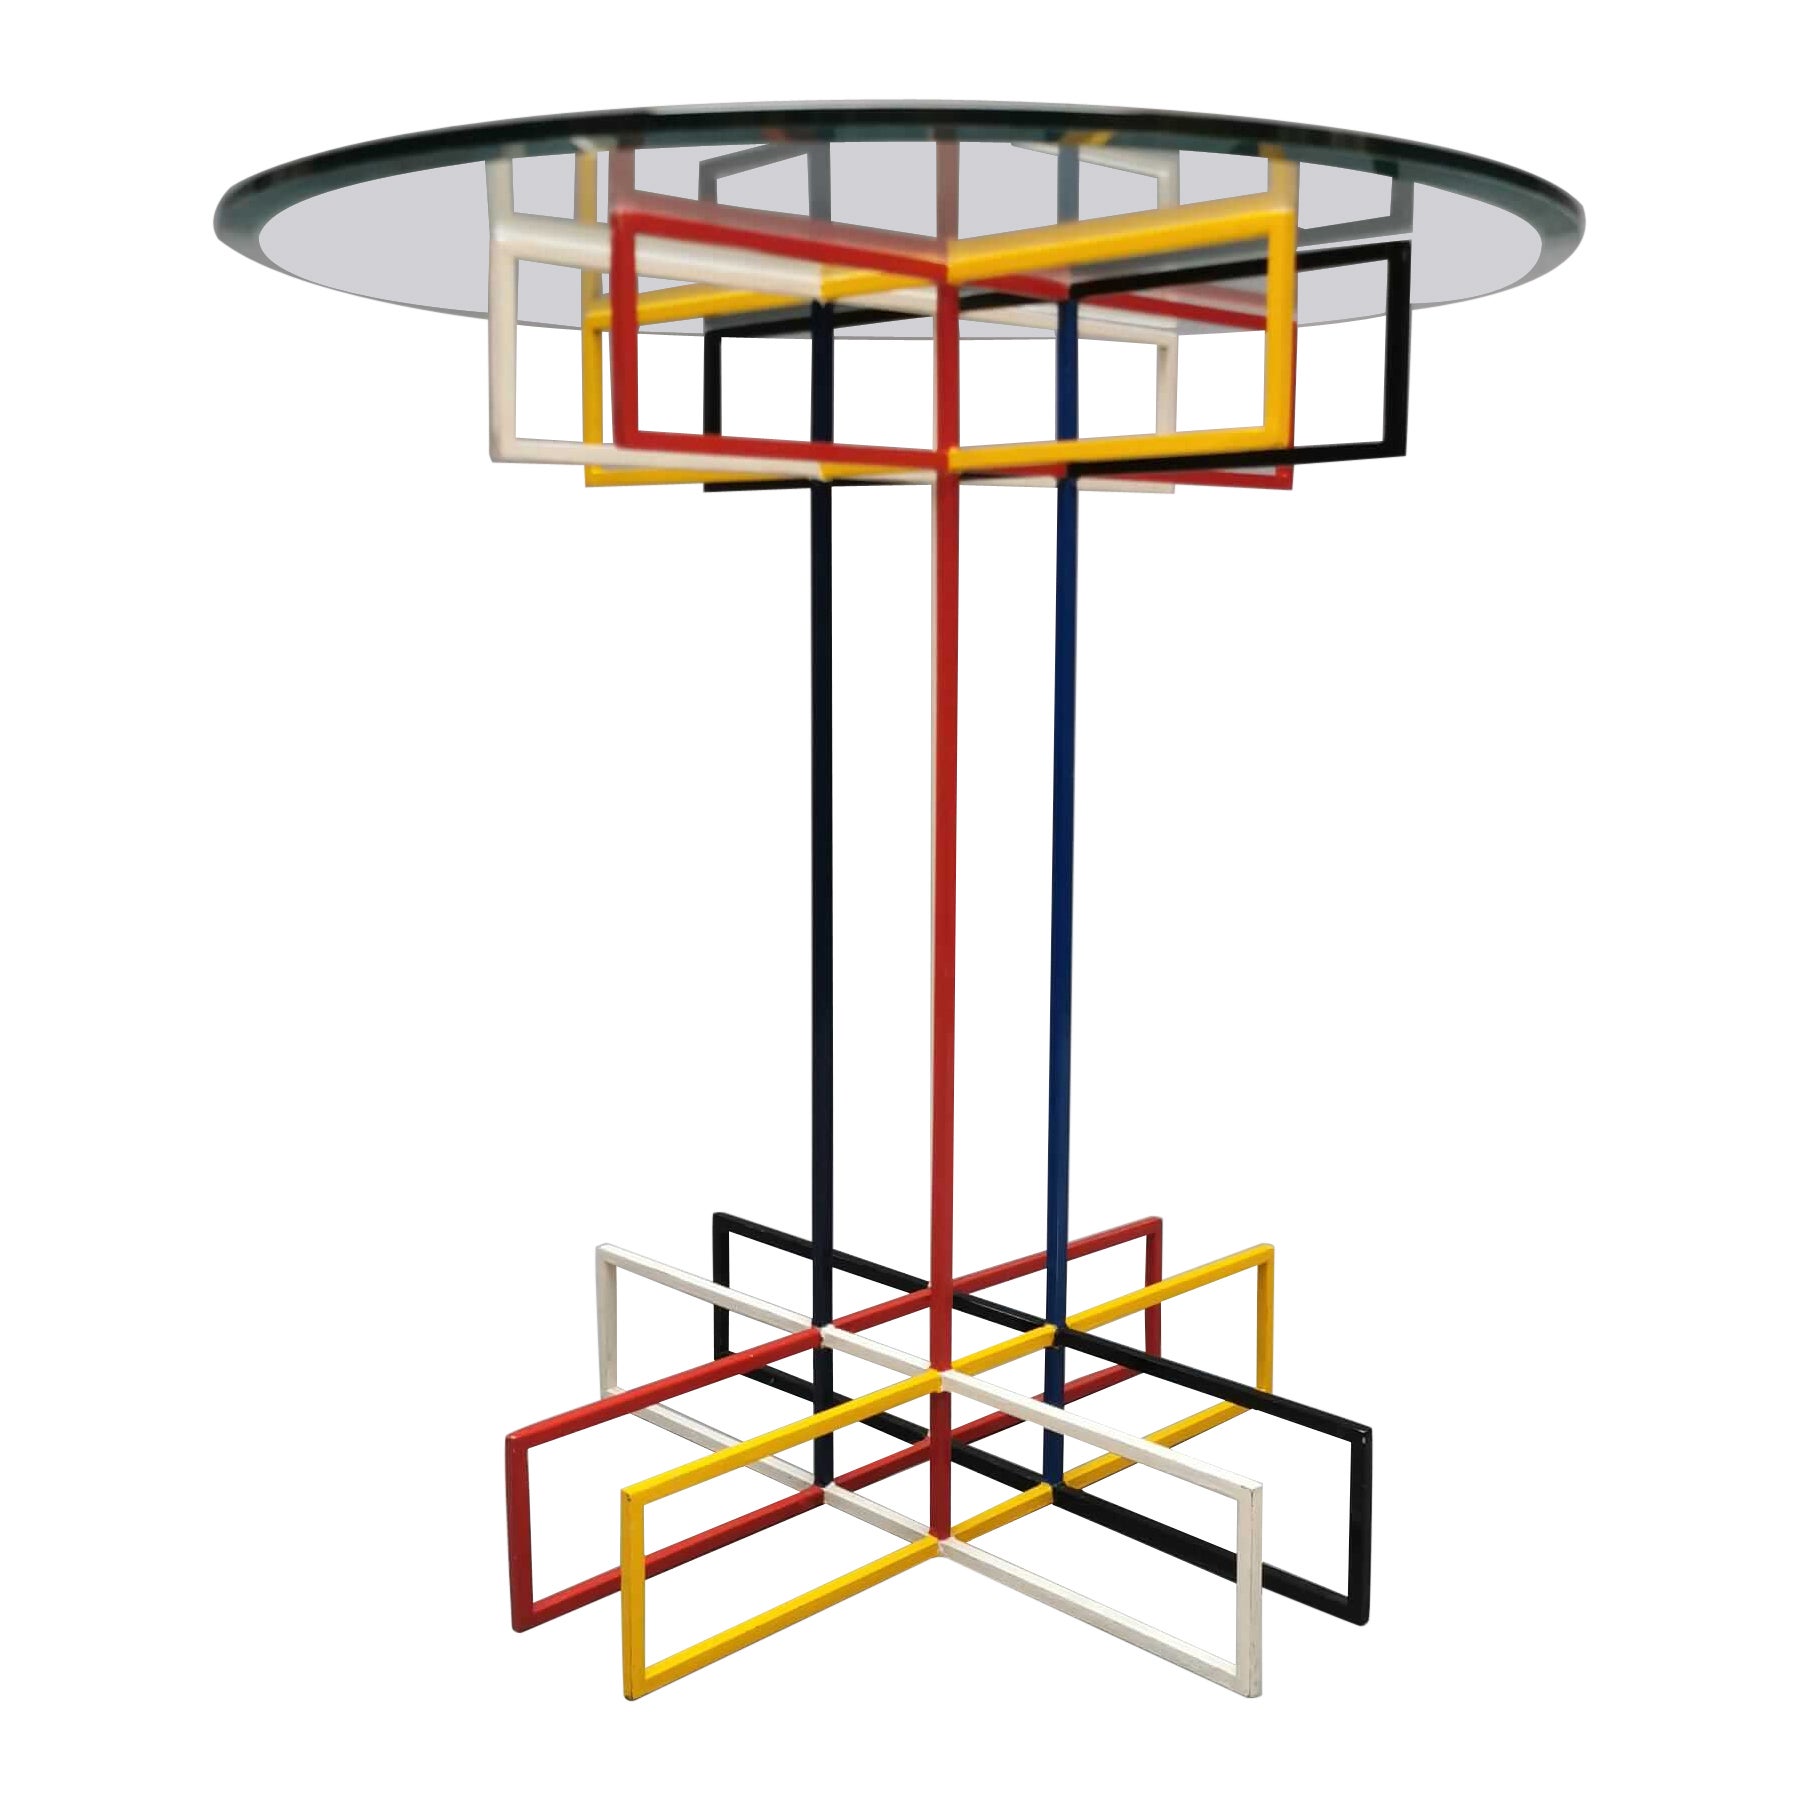  Table de style Mondrian en vente